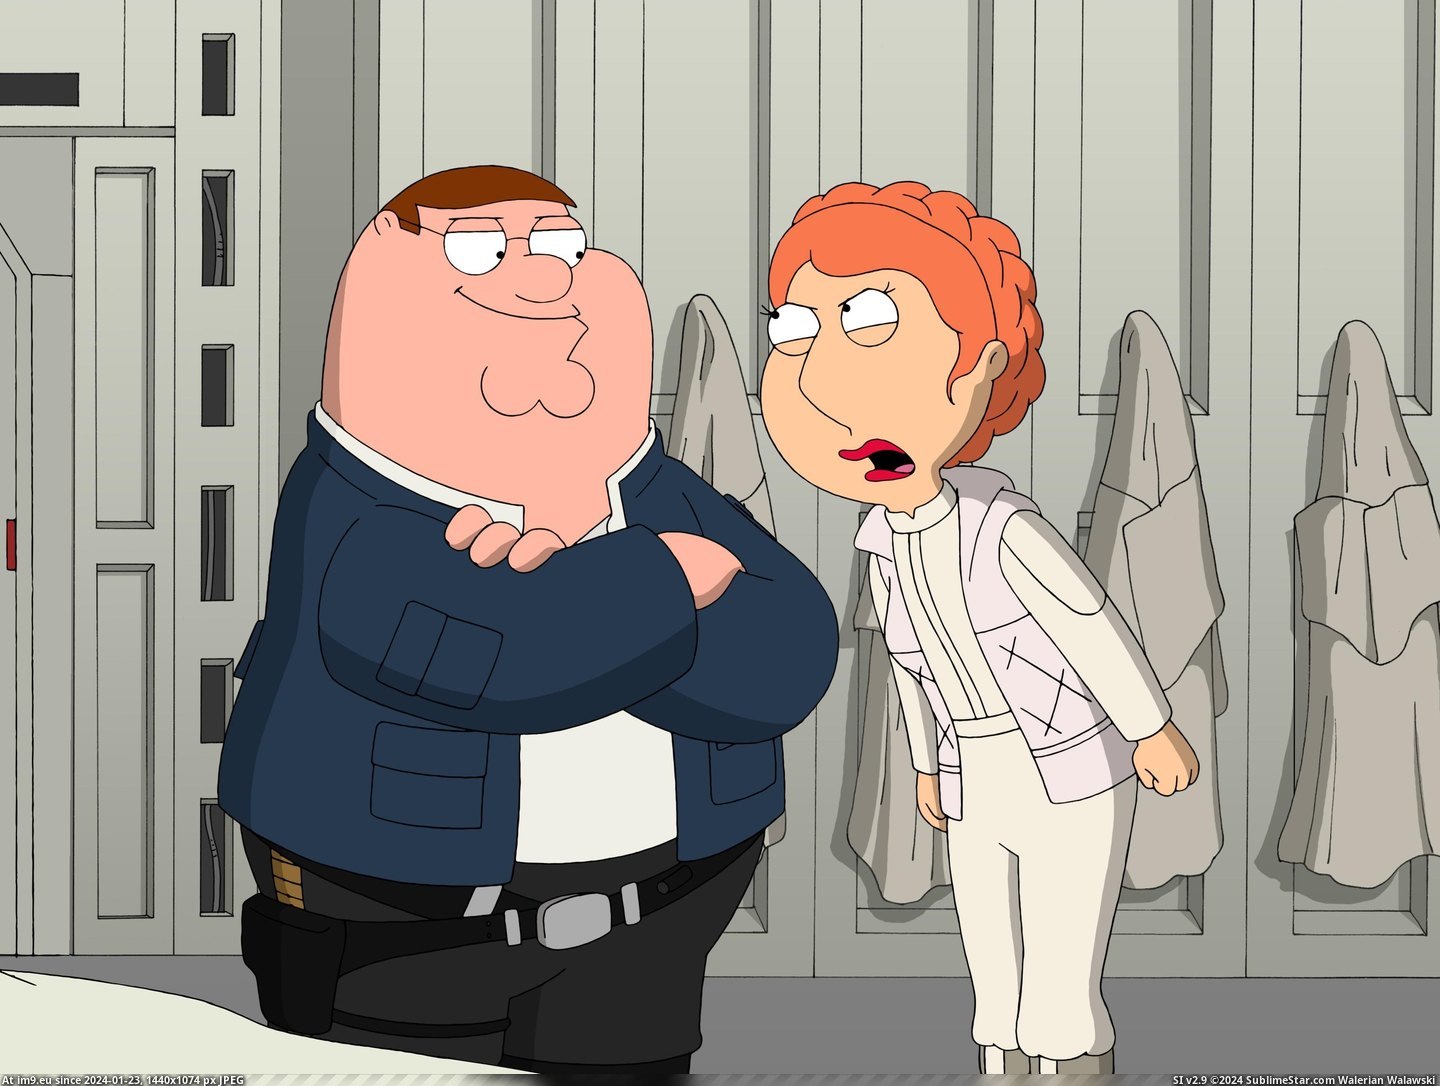 #Guy #Cartoon #Family Cartoon Family Guy 178528 Pic. (Obraz z album TV Shows HD Wallpapers))